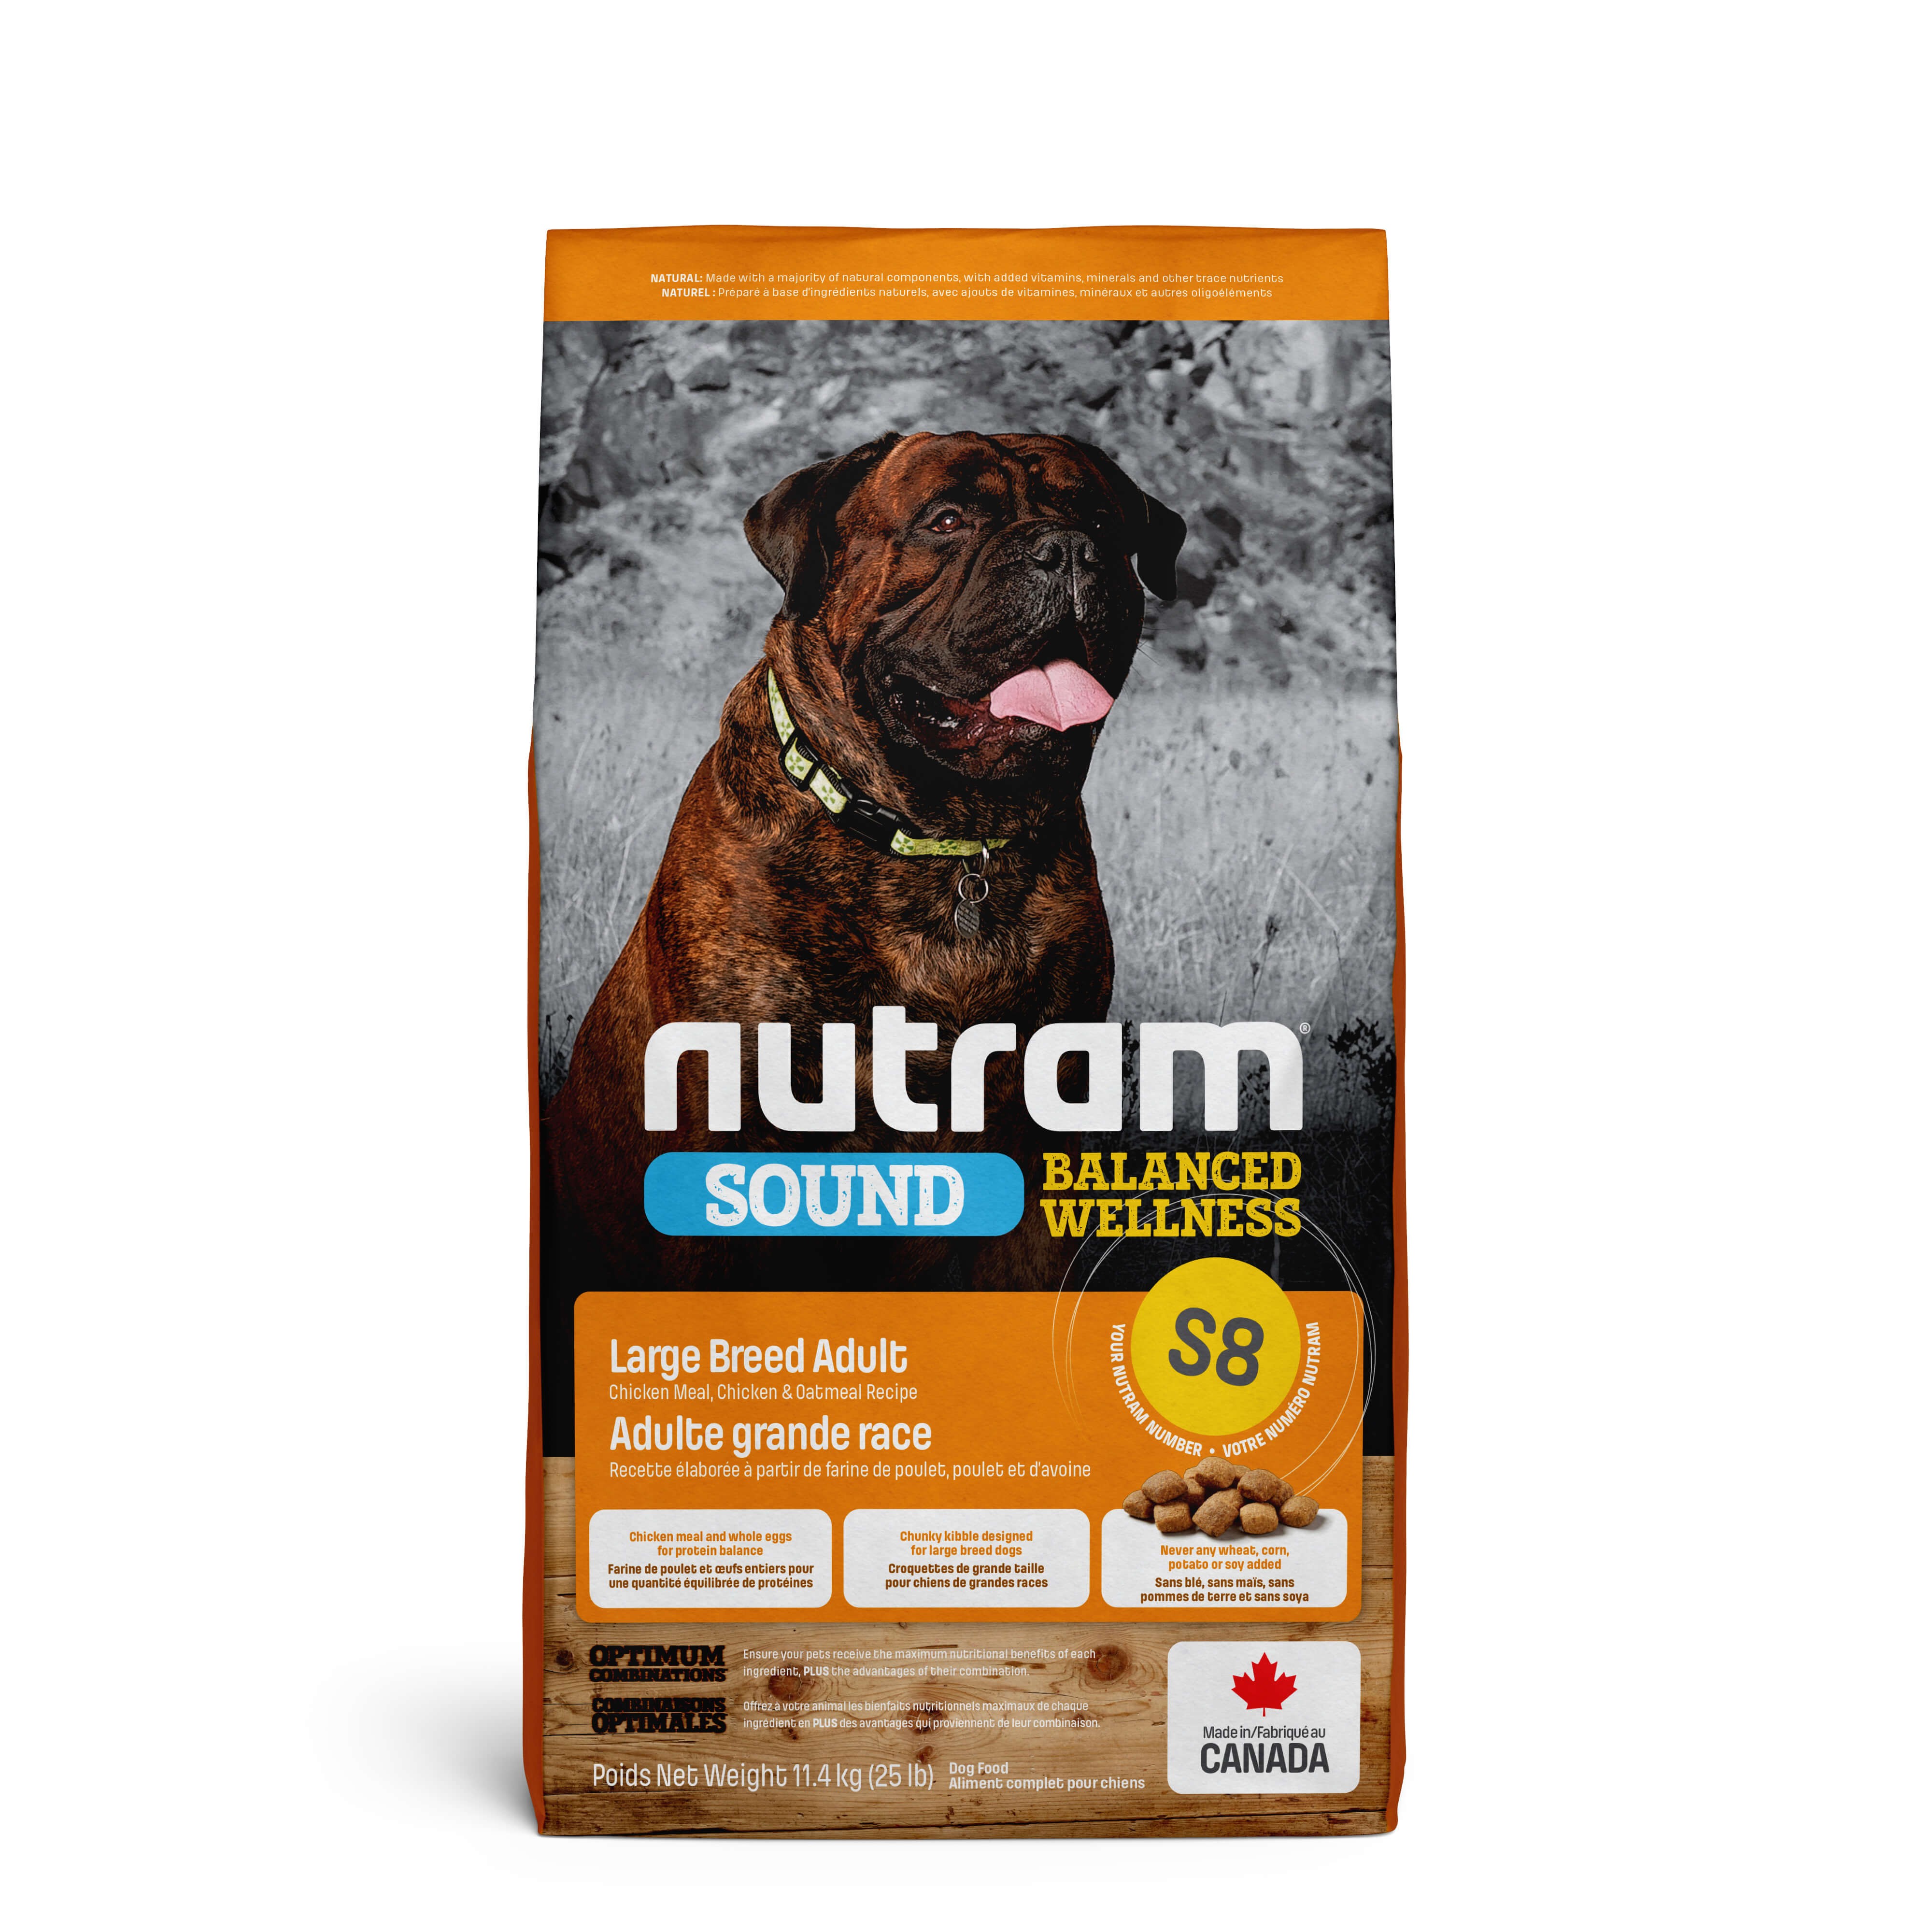 Nutram Sound Balanced Wellness Adult Large Breed S8 hond